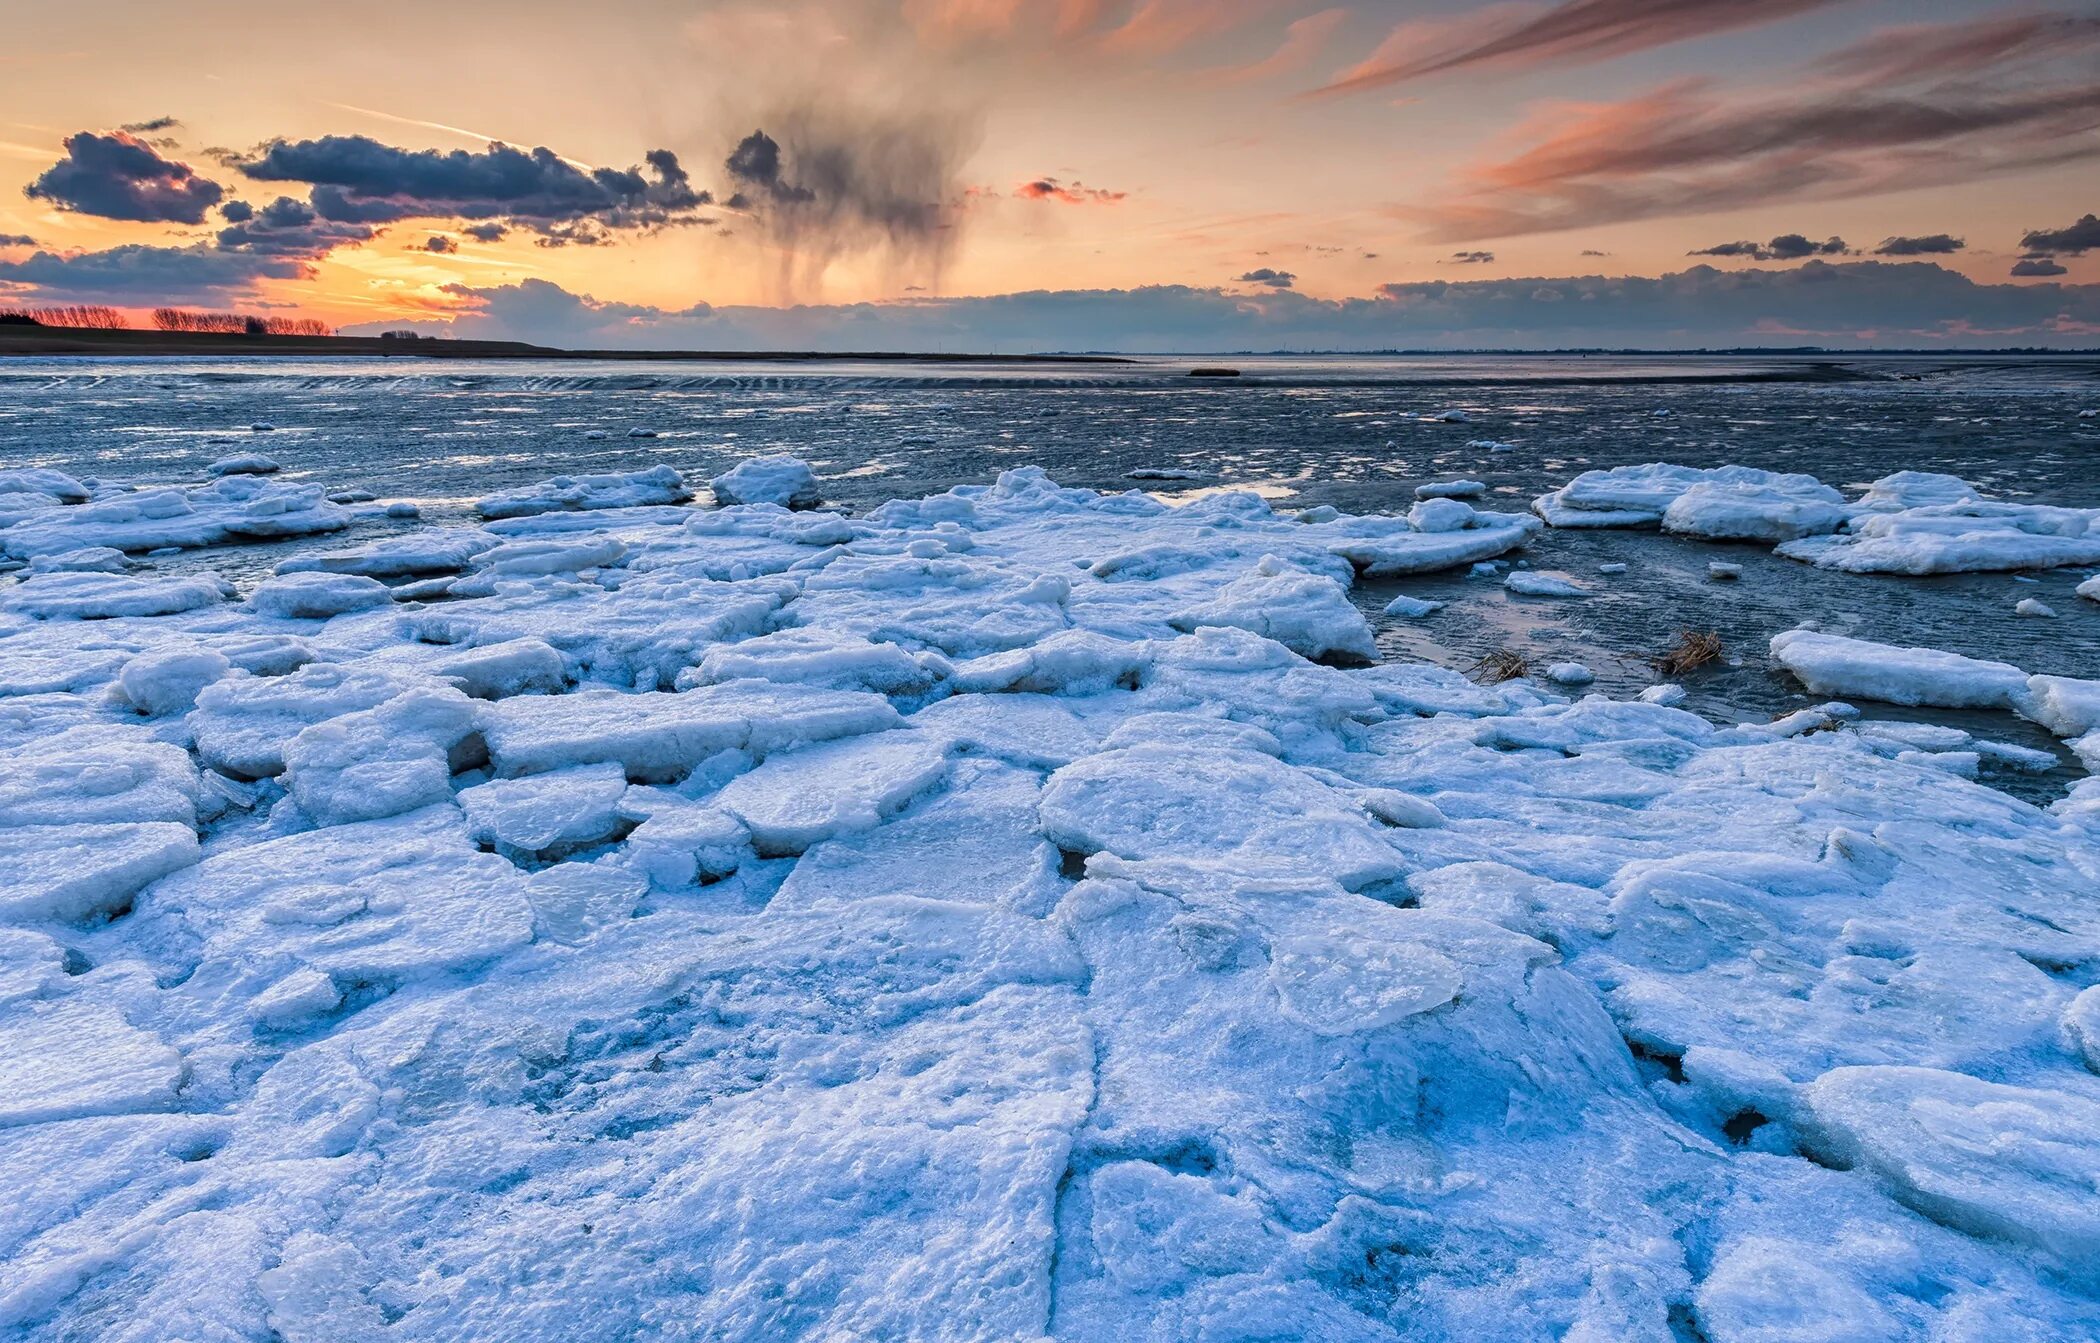 Лед на море. Море покрытое льдом. Ледяное море. Ледяное побережье. Тихо ночью покрывает лед